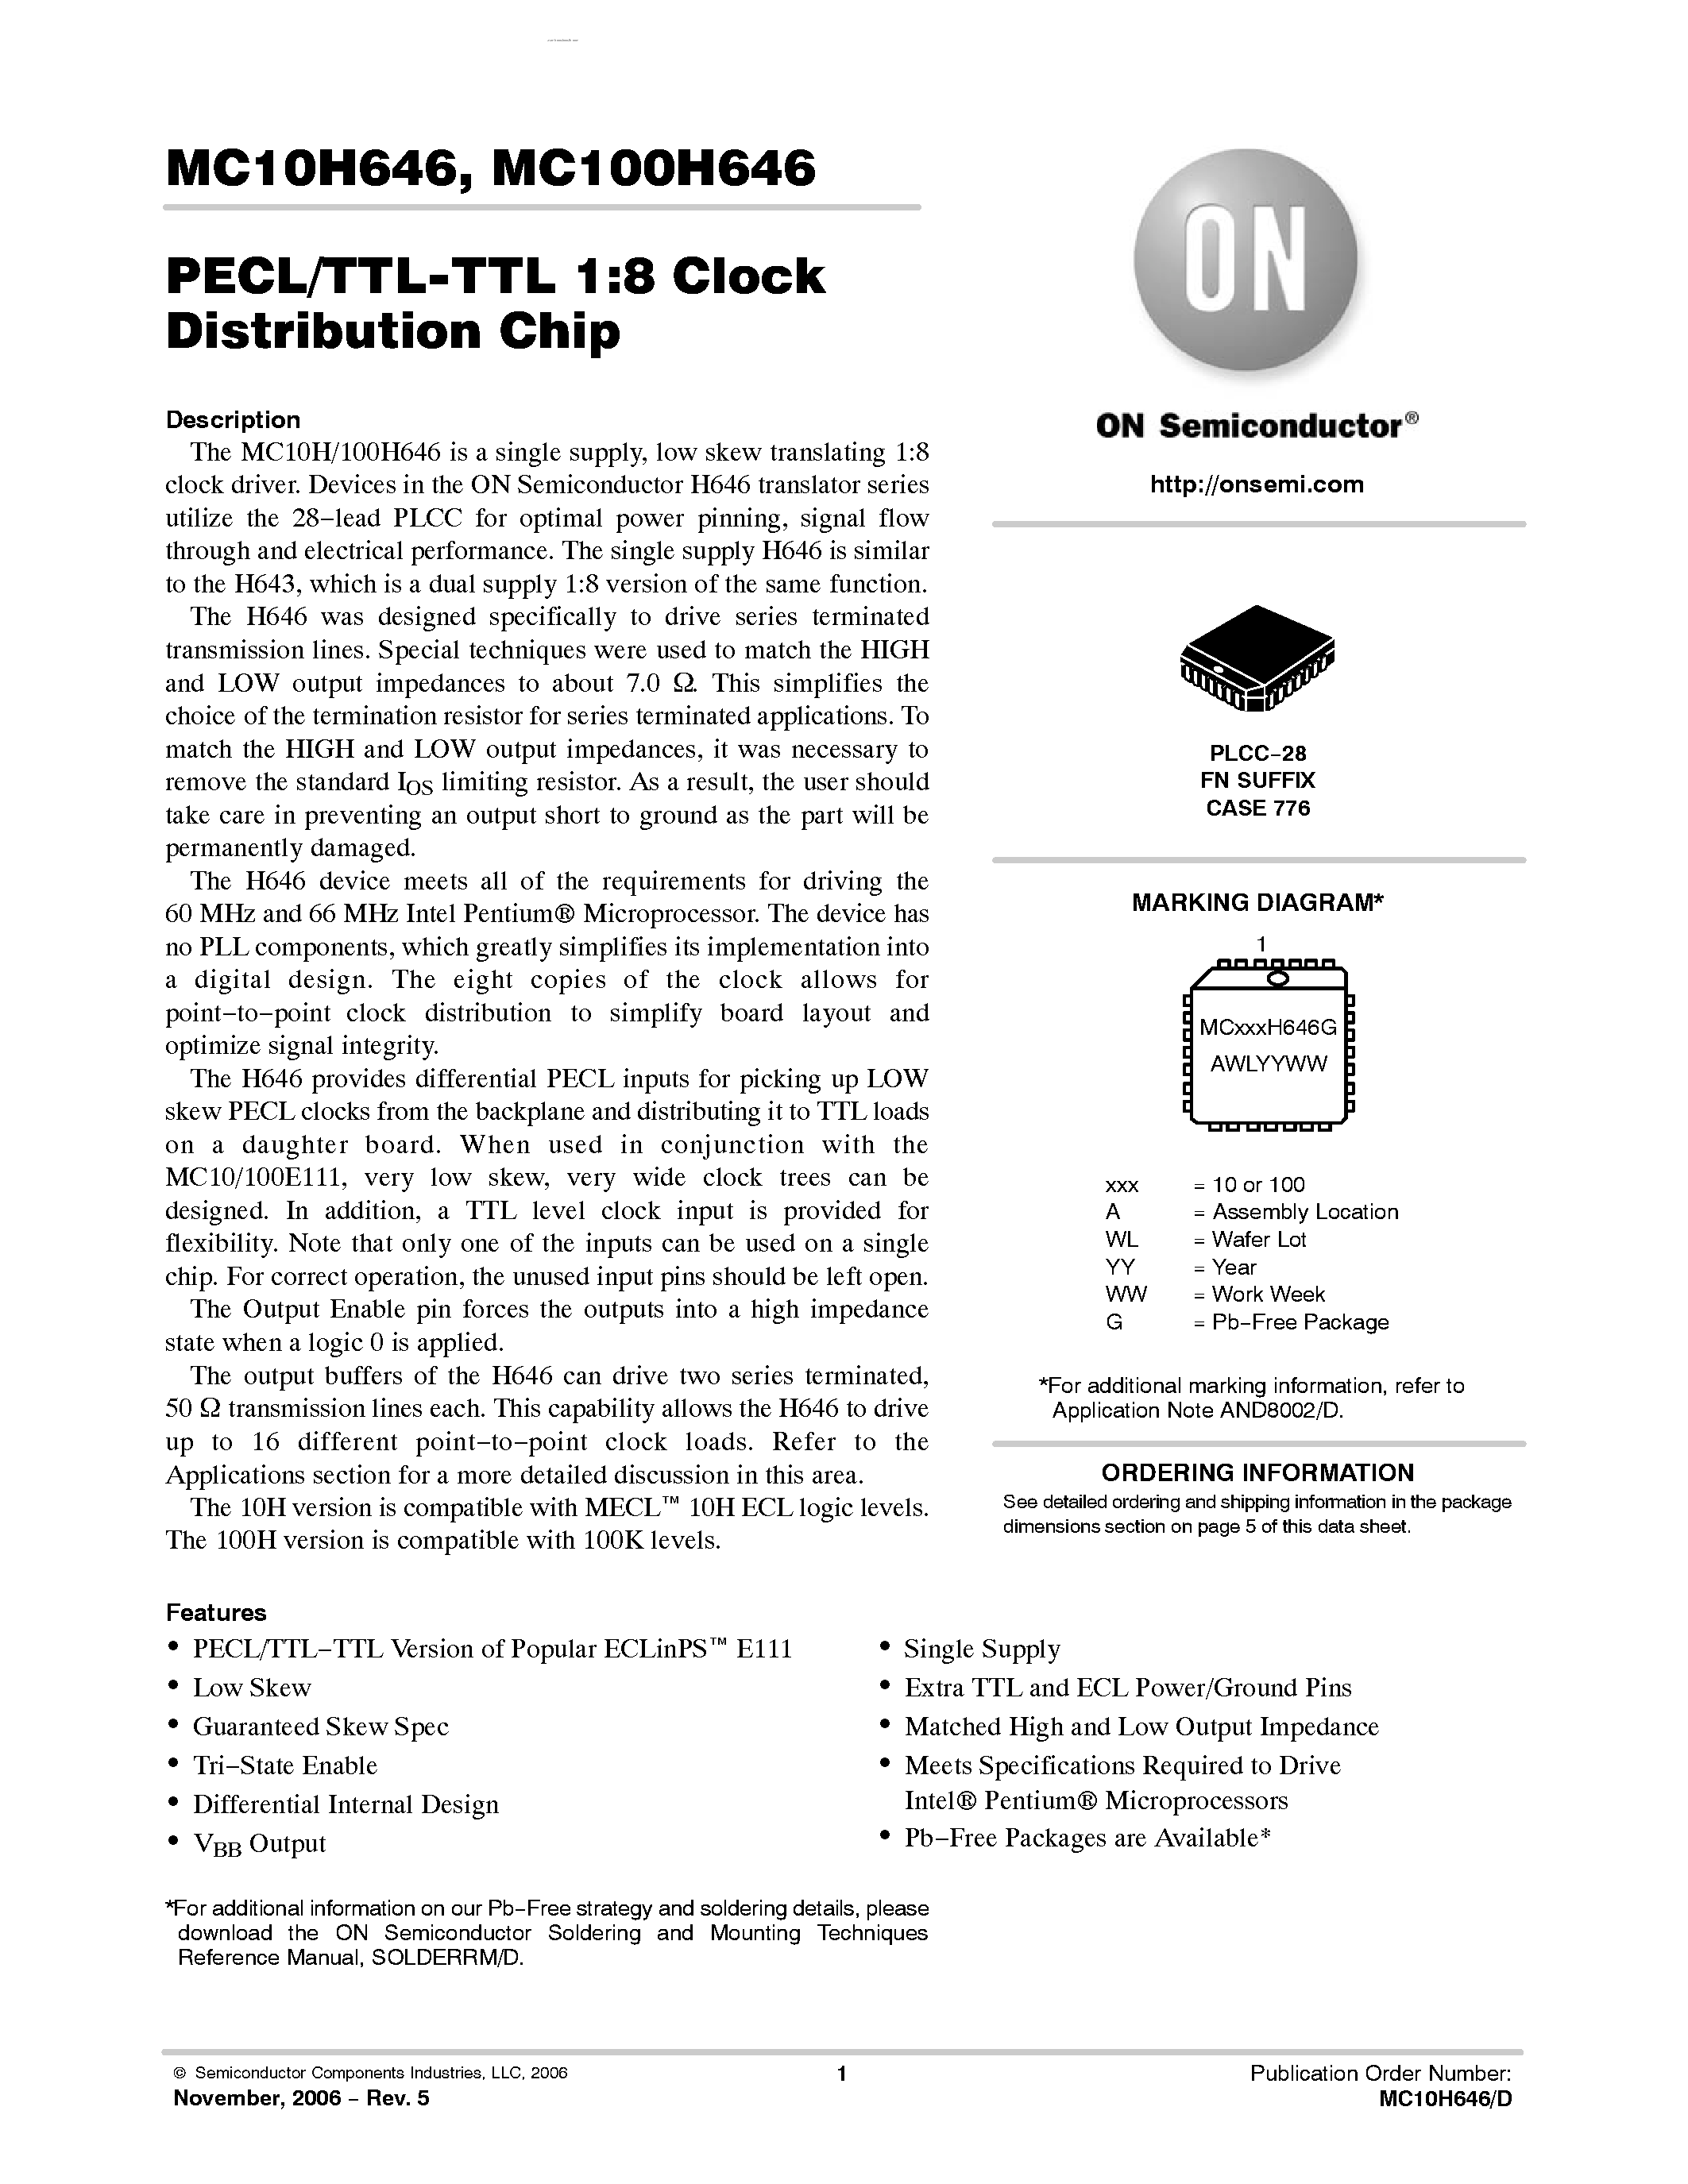 Даташит MC10H646-PENTIUM MICROPROCESSOR PECL/TTL-TTL CLOCK DRIVER страница 1